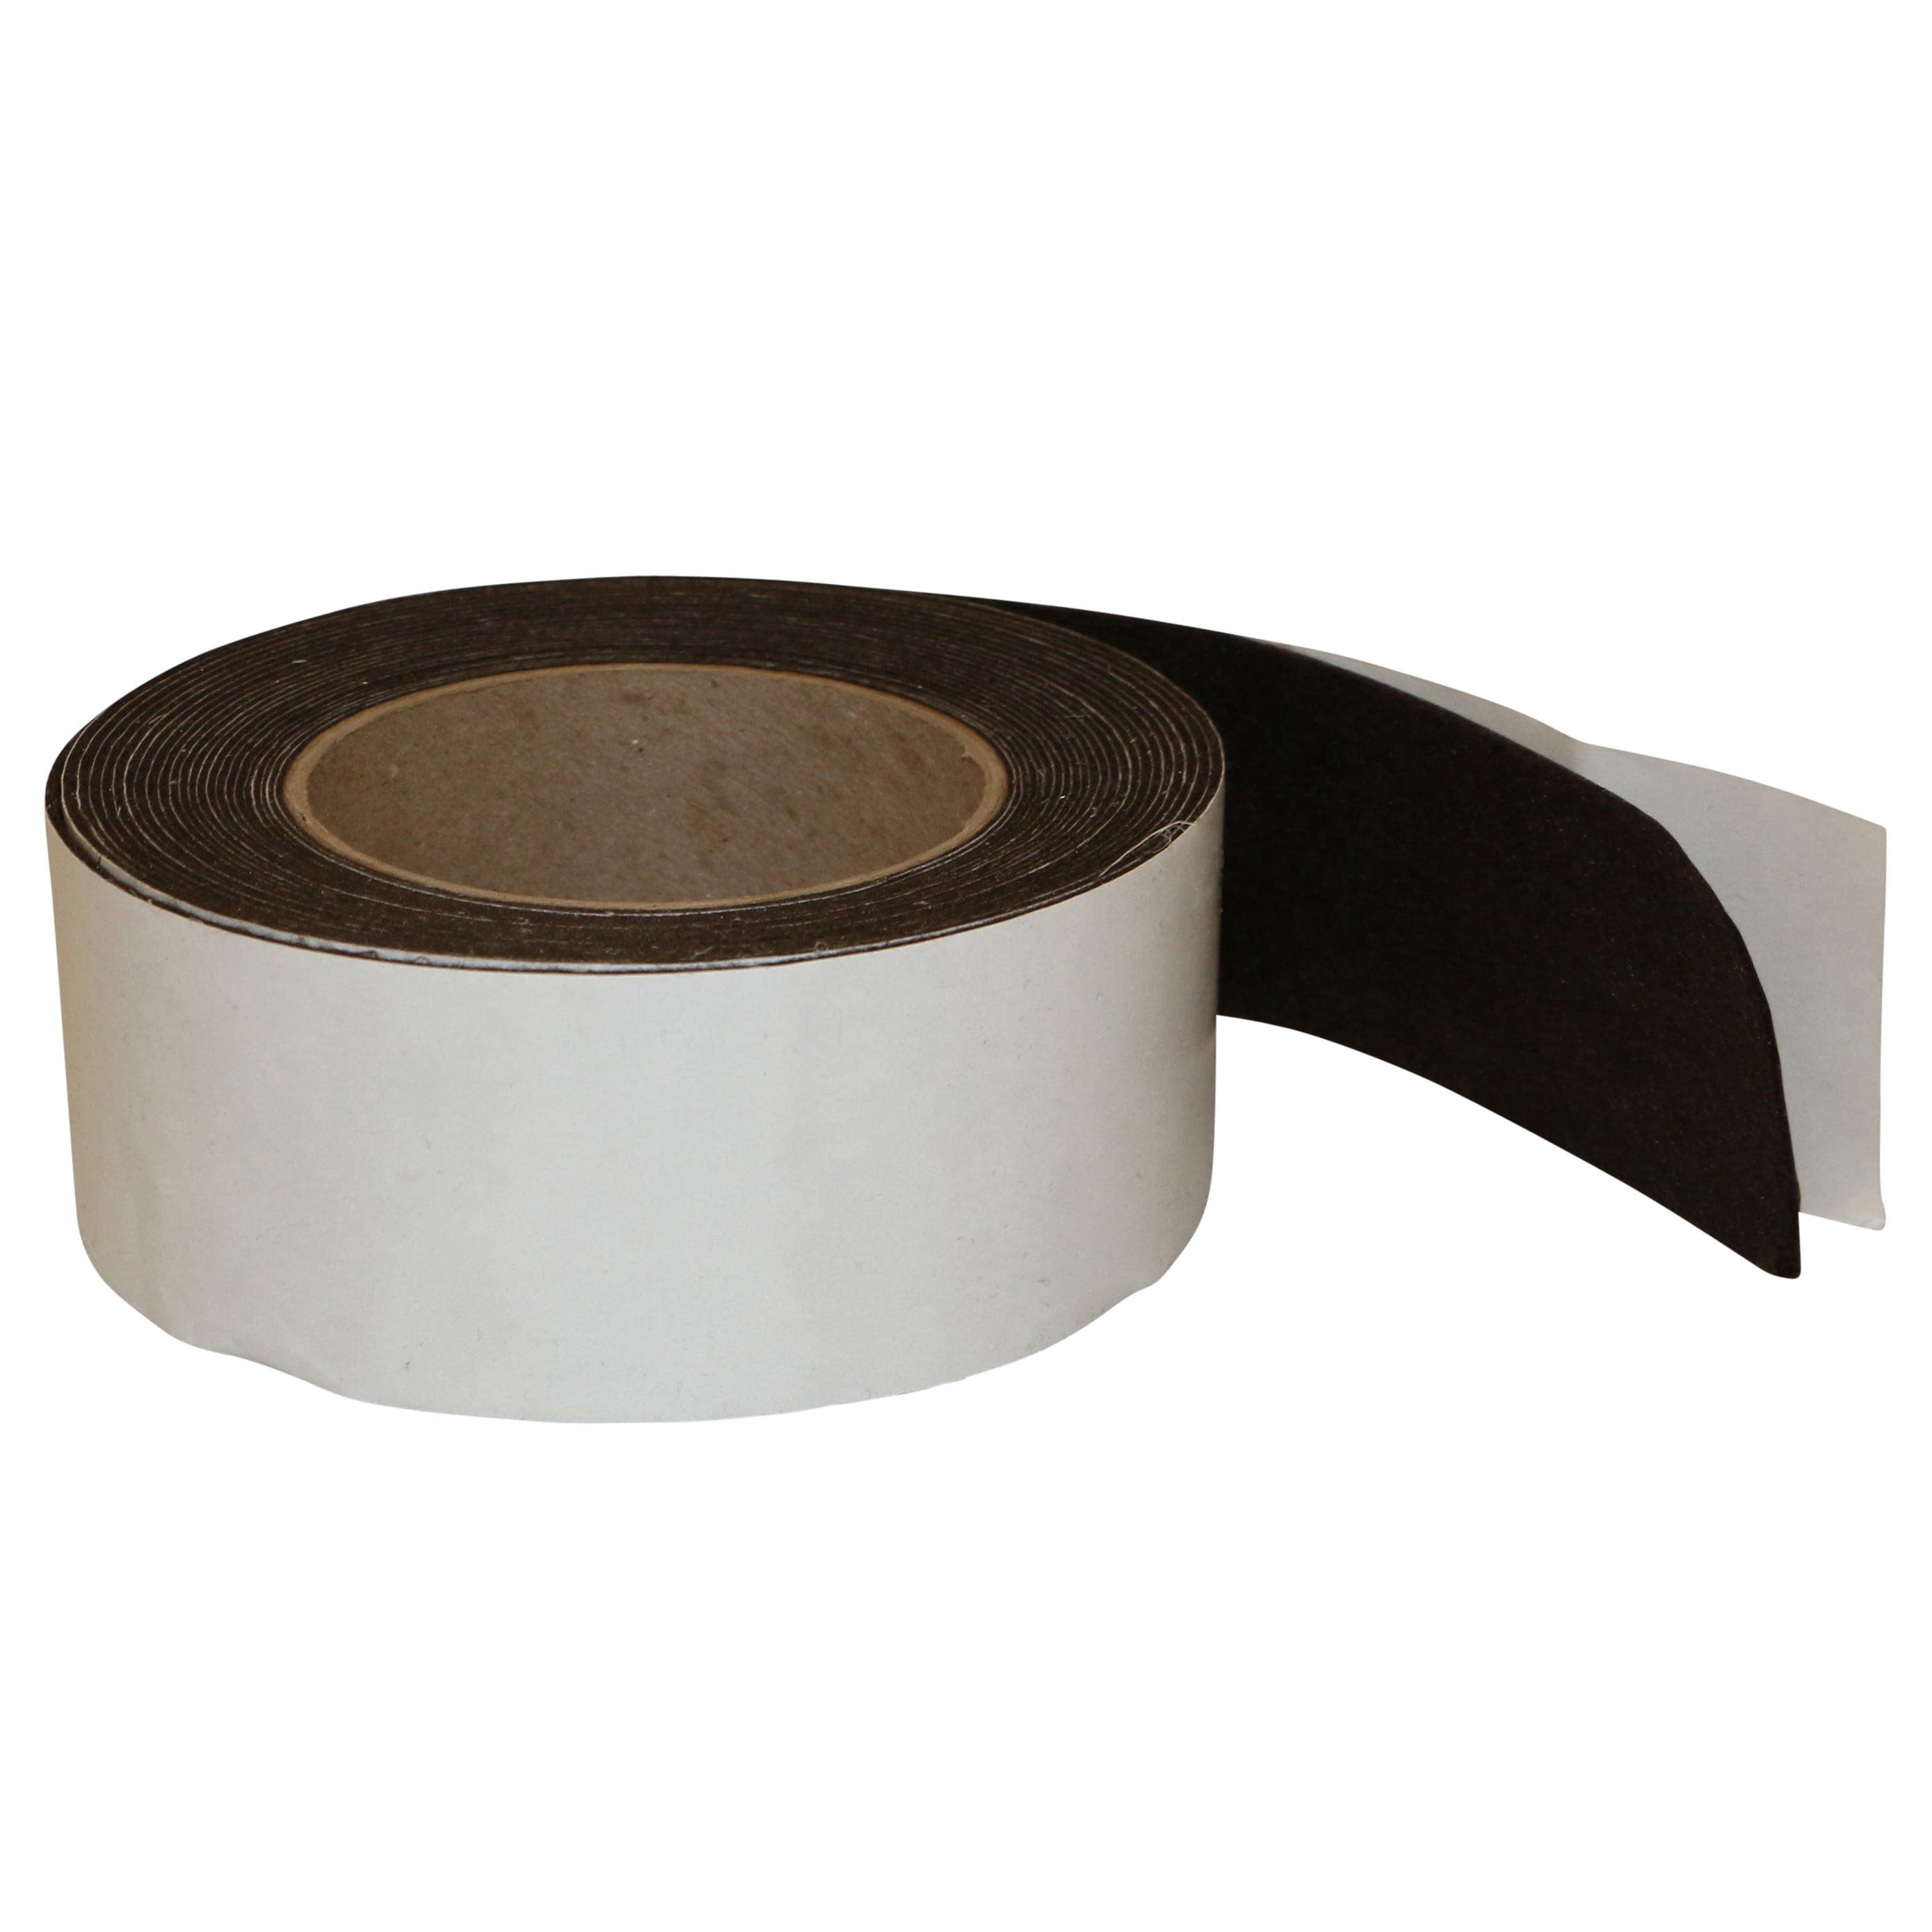 JVCC Acrylic Craft Felt Tape [1mm thick felt] (ACF-06): 3/4 in. x 25 ft.  (Tan)